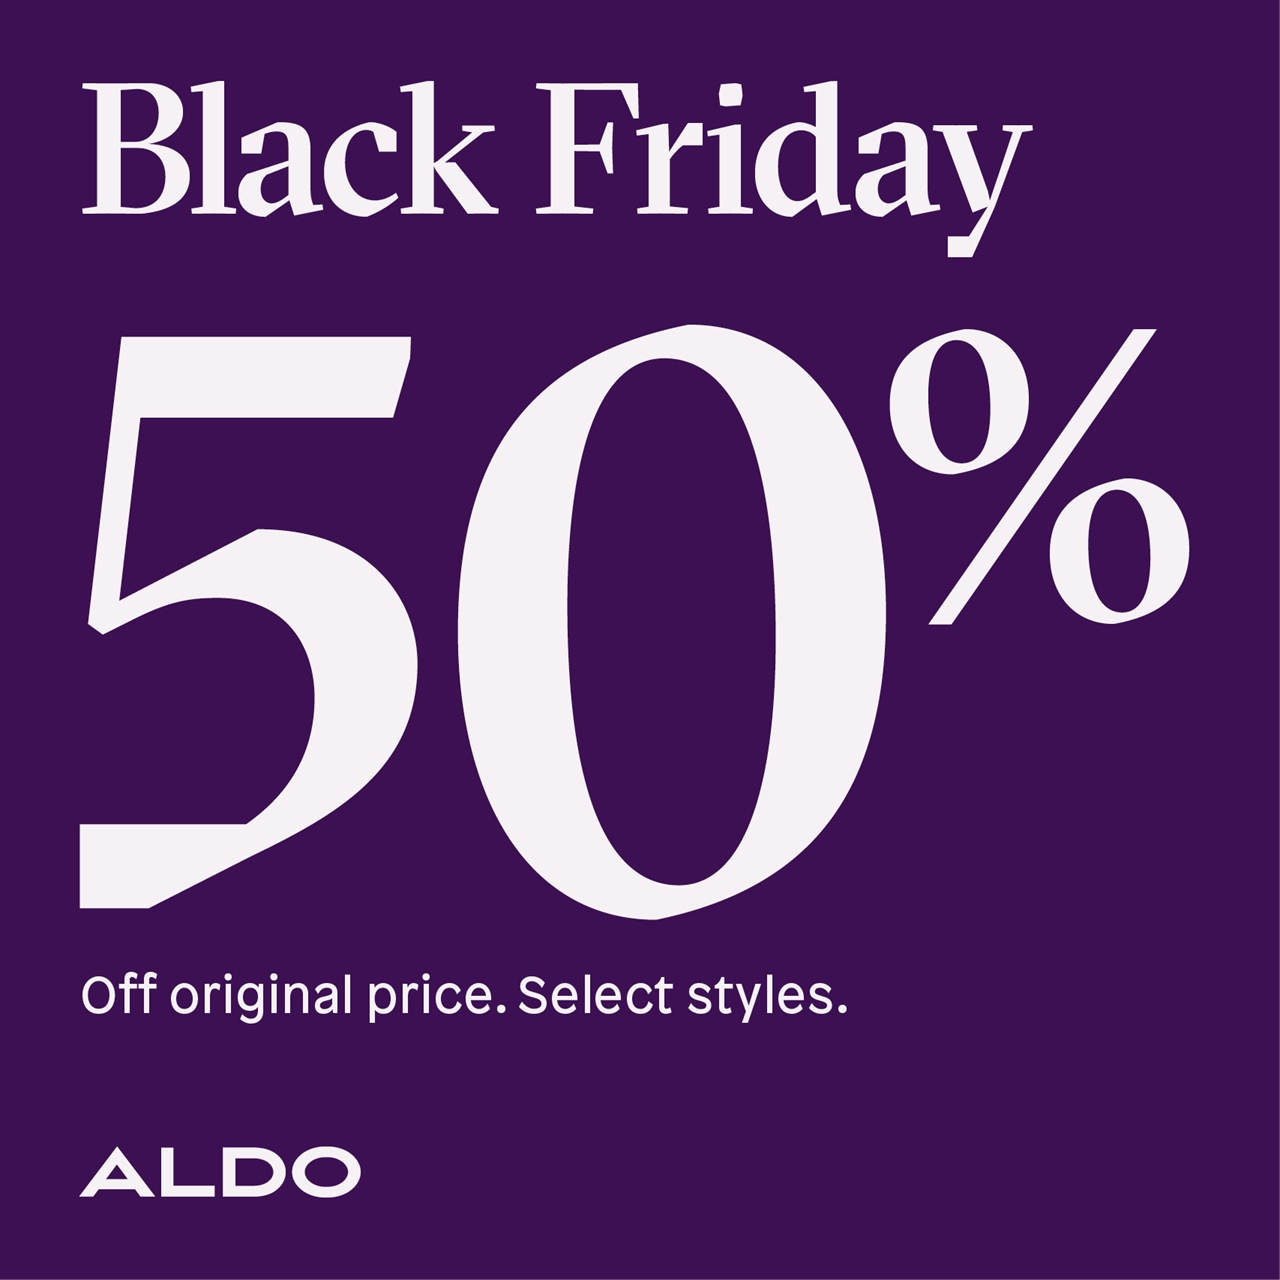 Aldo: Black Friday 50% Off original price - Palisades